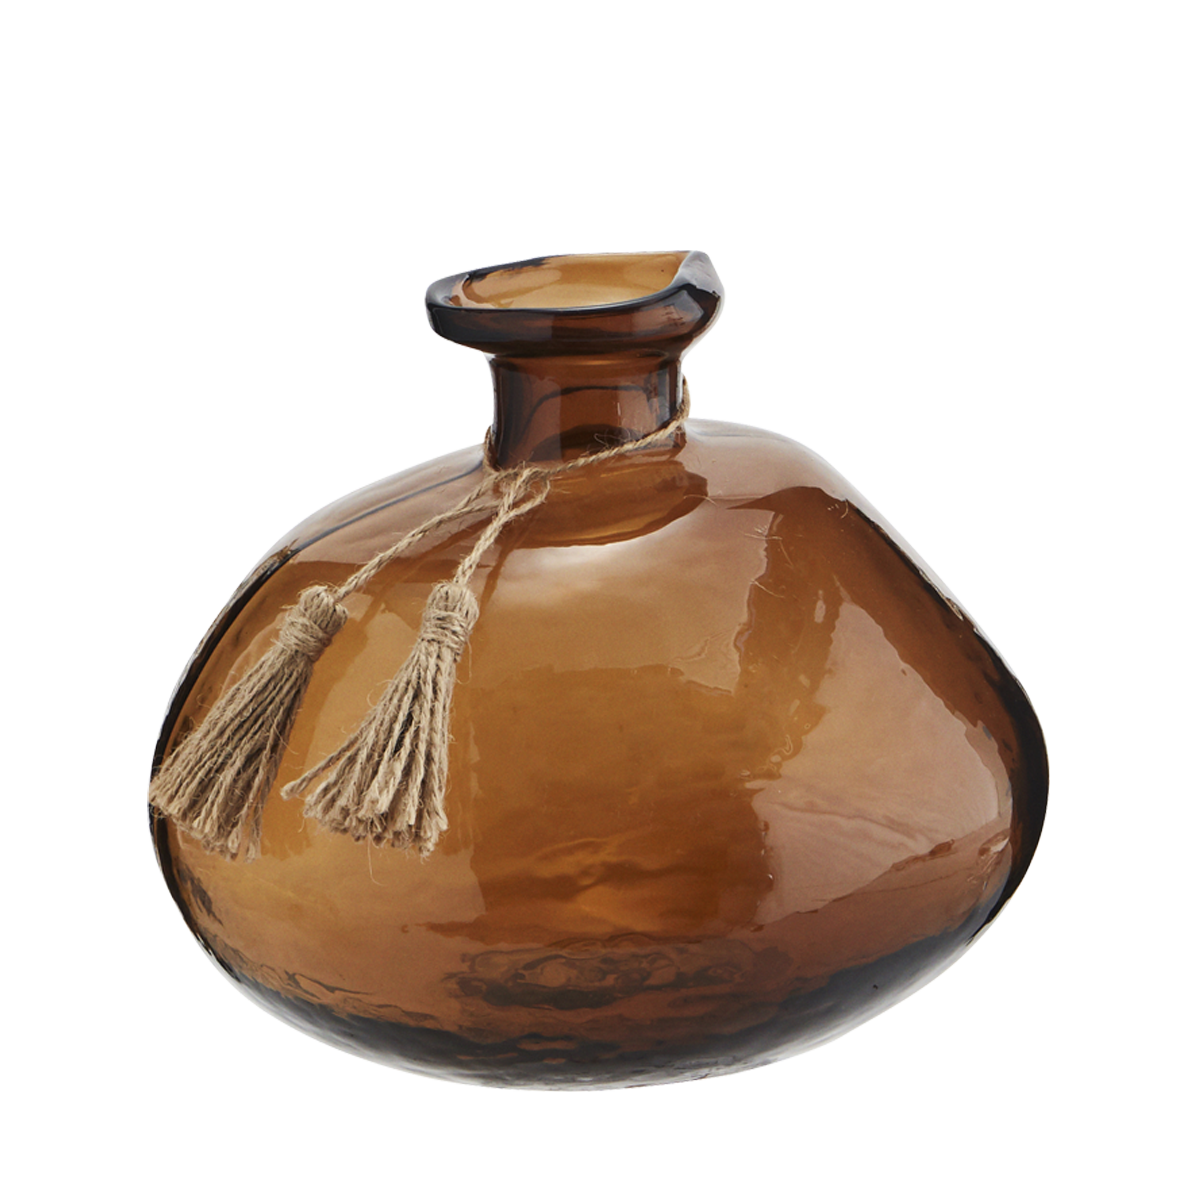 Organic shaped glass vase w/ tassels